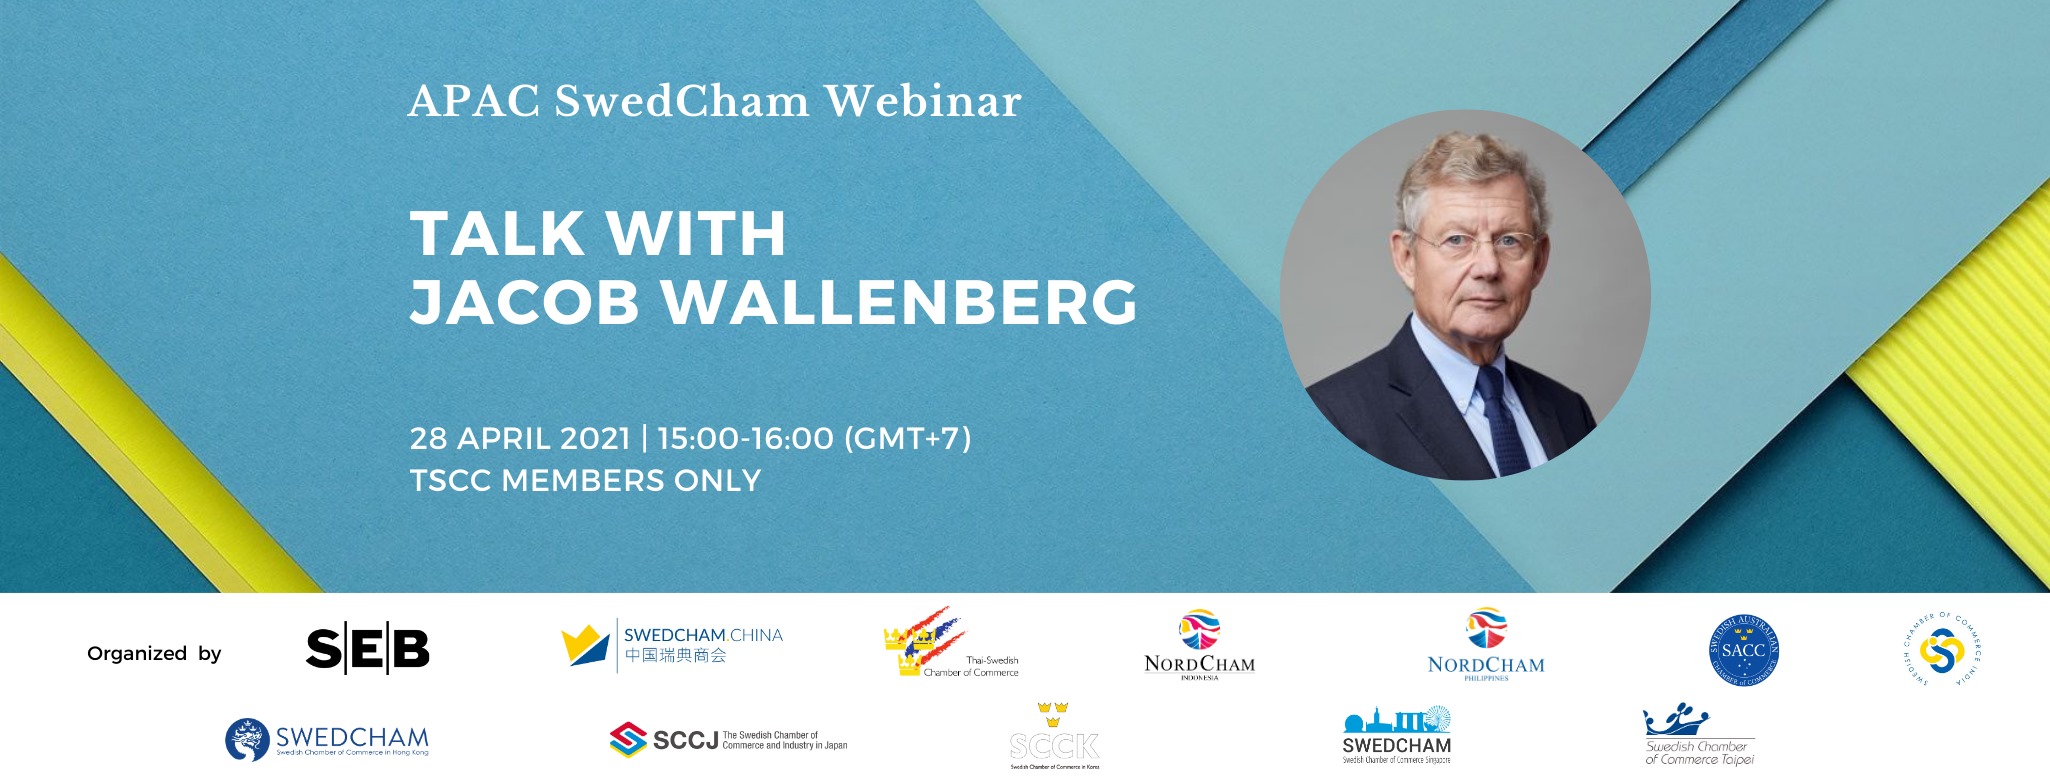 Jacob Wallenberg returns to speak at Swedcham's APAC webinar